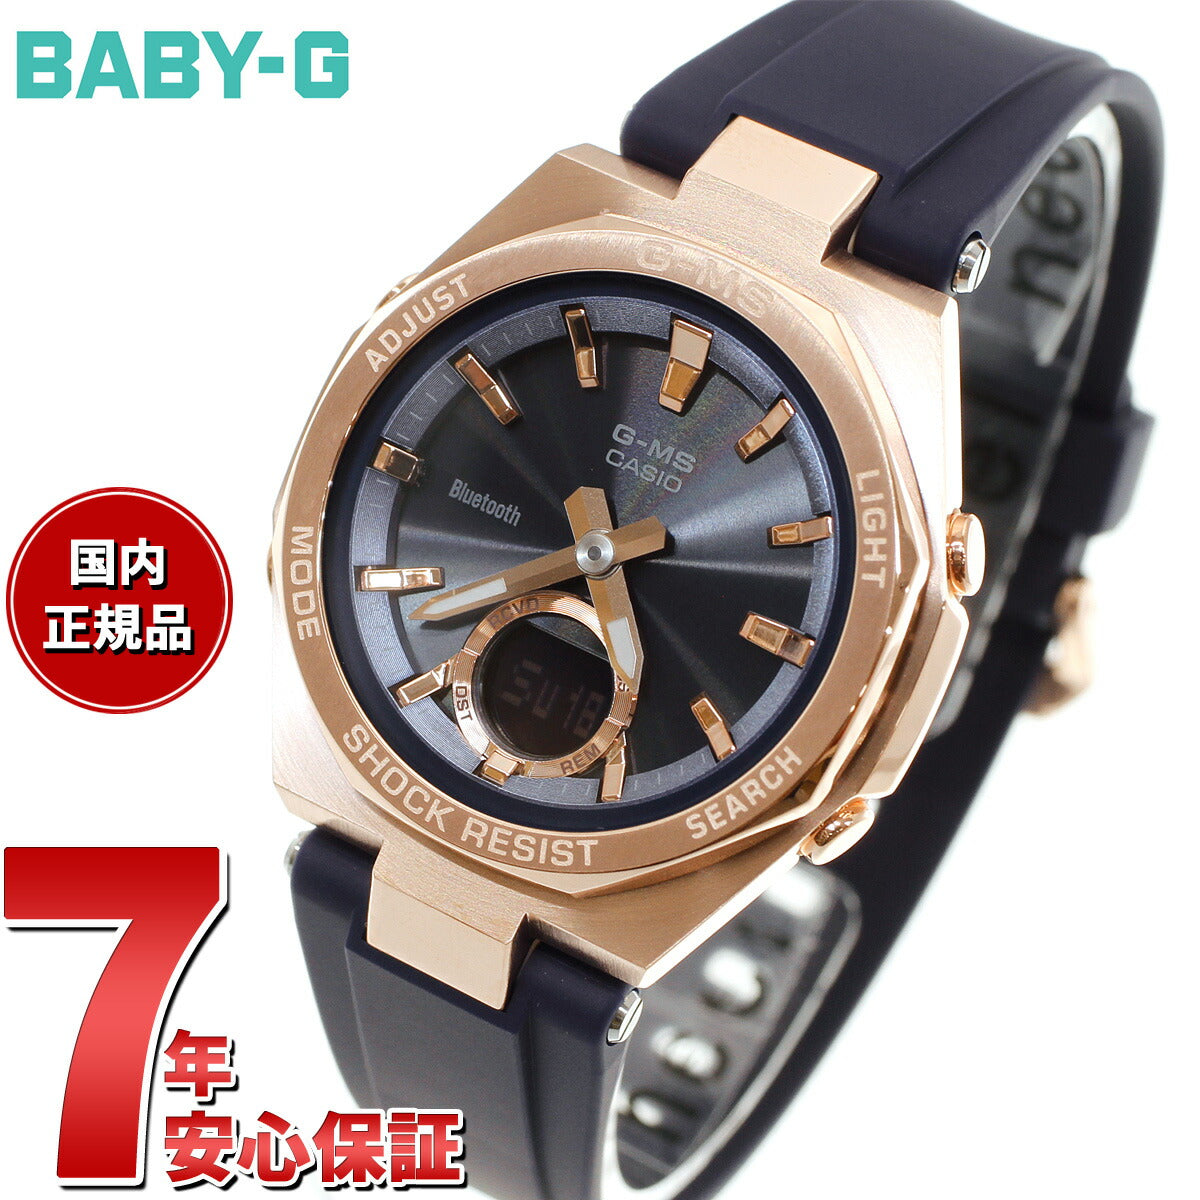 BABY-G ベビーG MSG-B100G-2AJF G-MS ジーミズ レディース 腕時計 ...